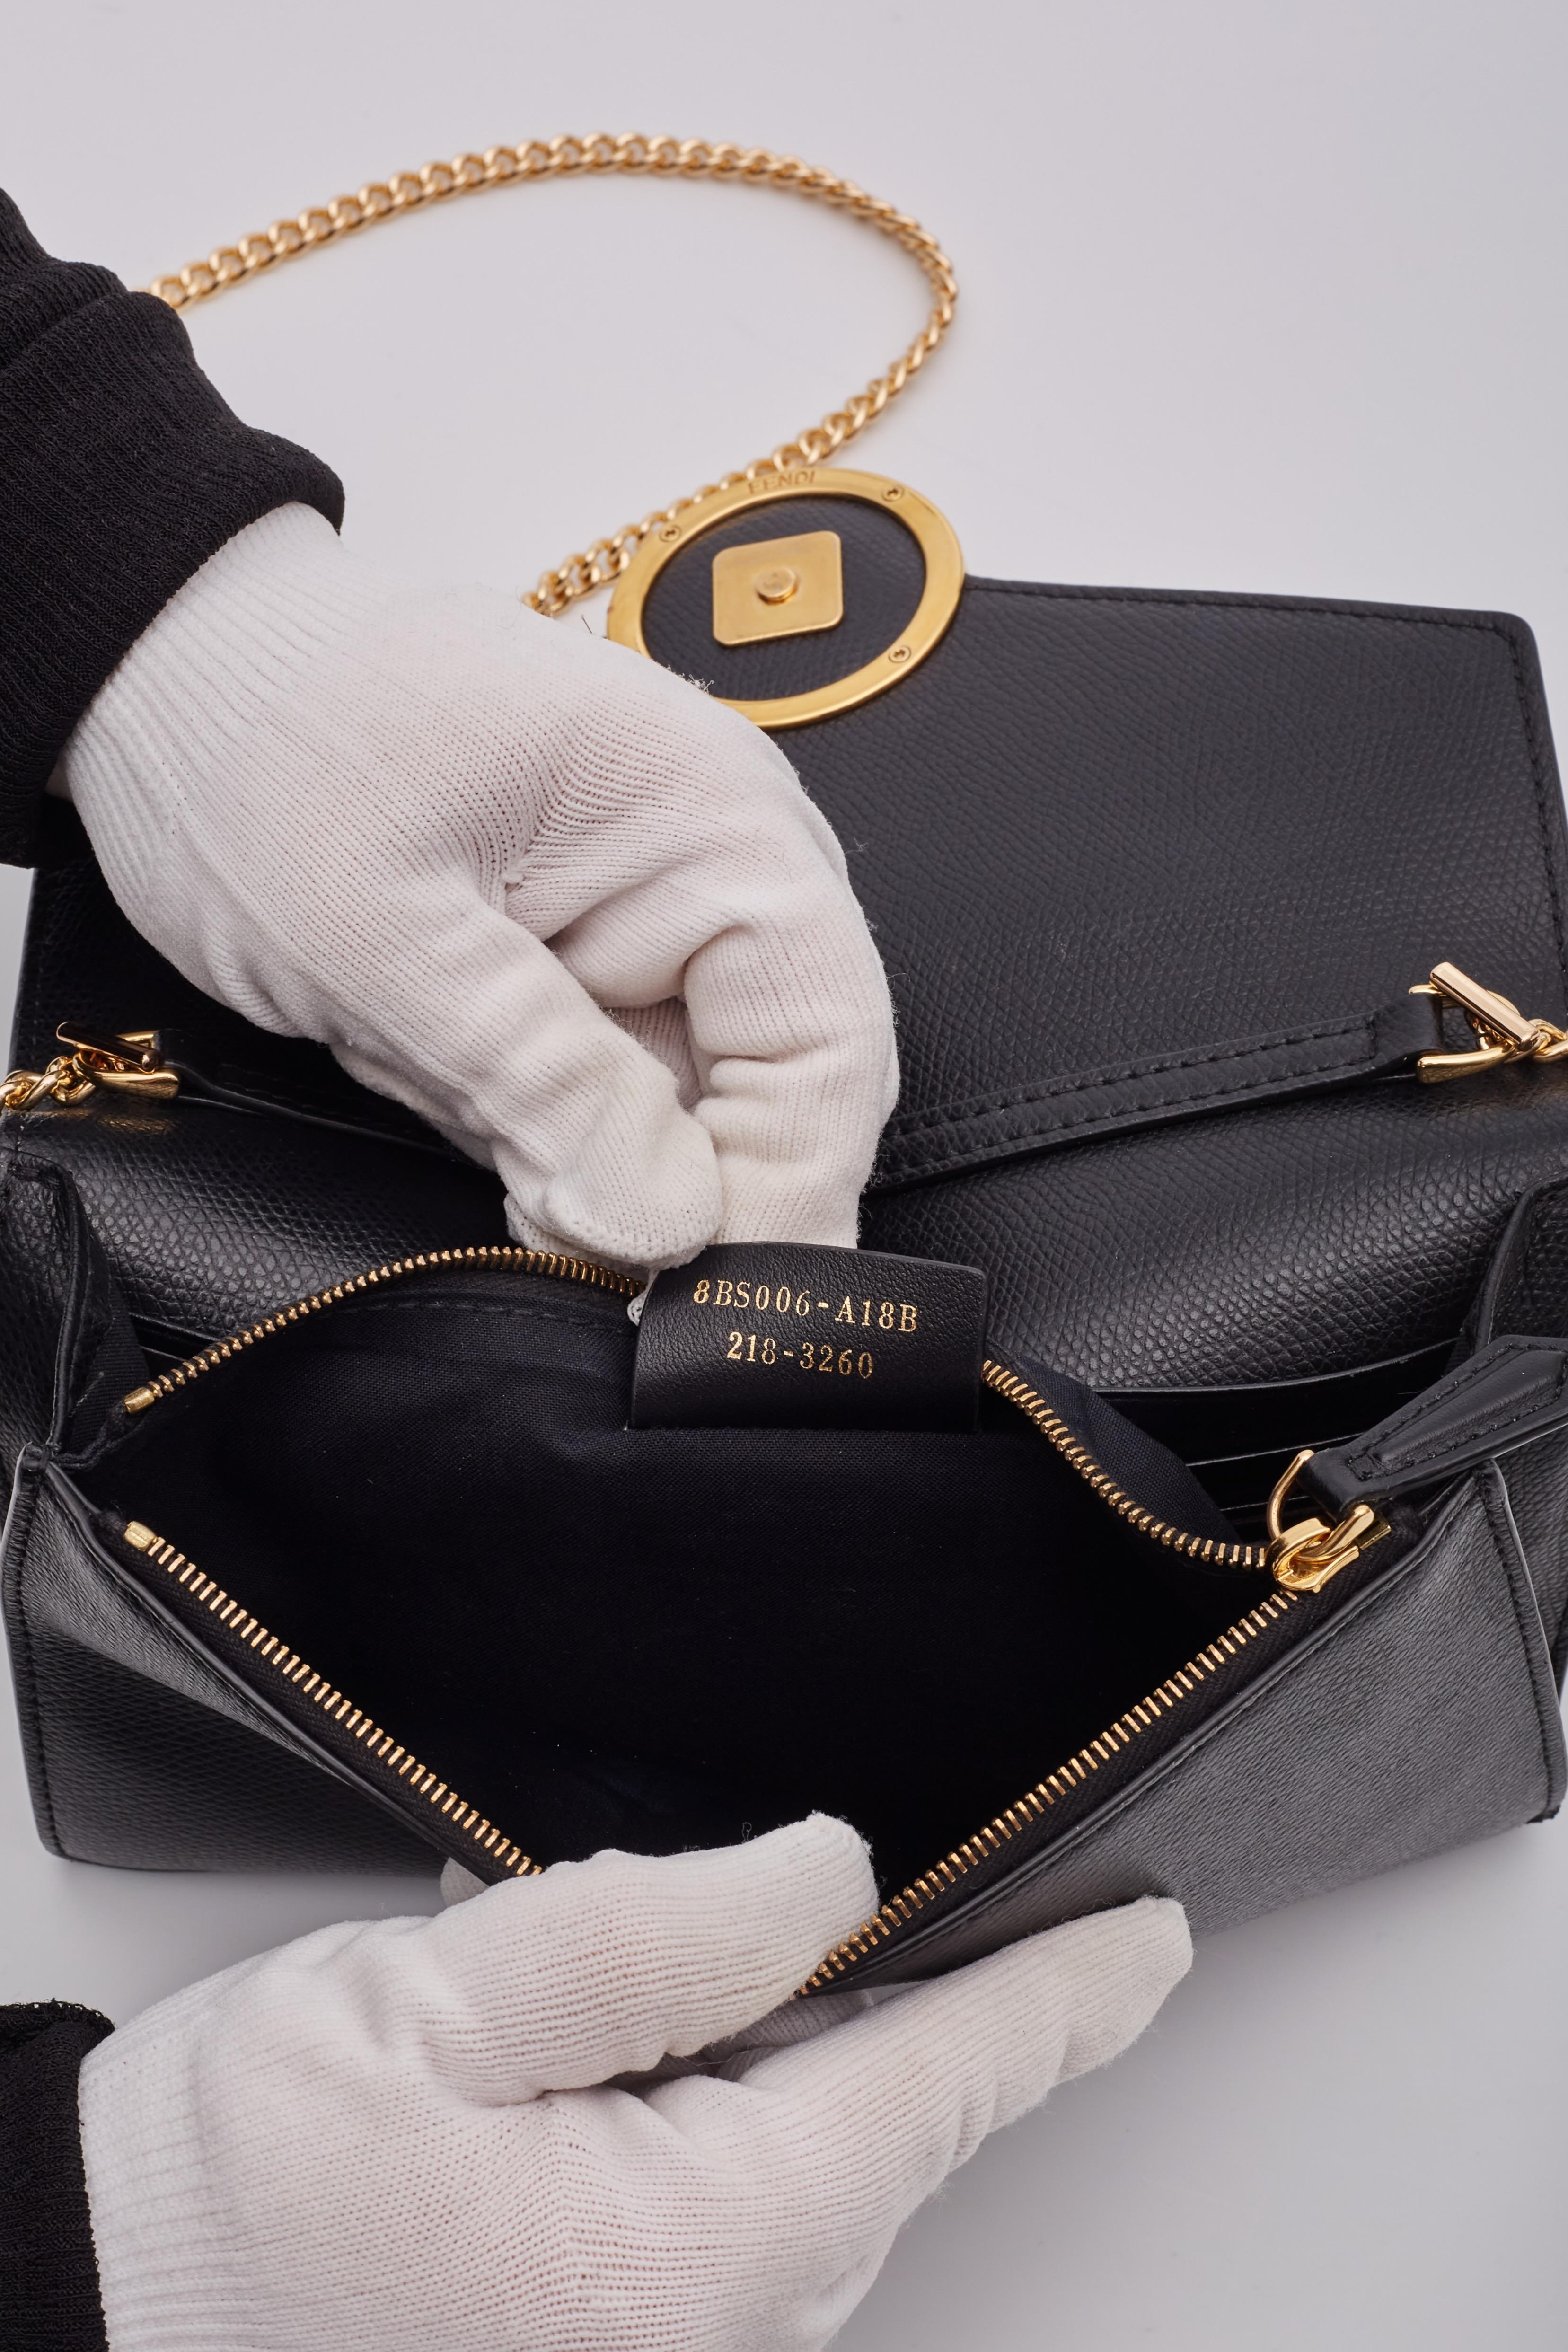 Fendi Black Leather F Logo Wallet On Chain Bag For Sale 8